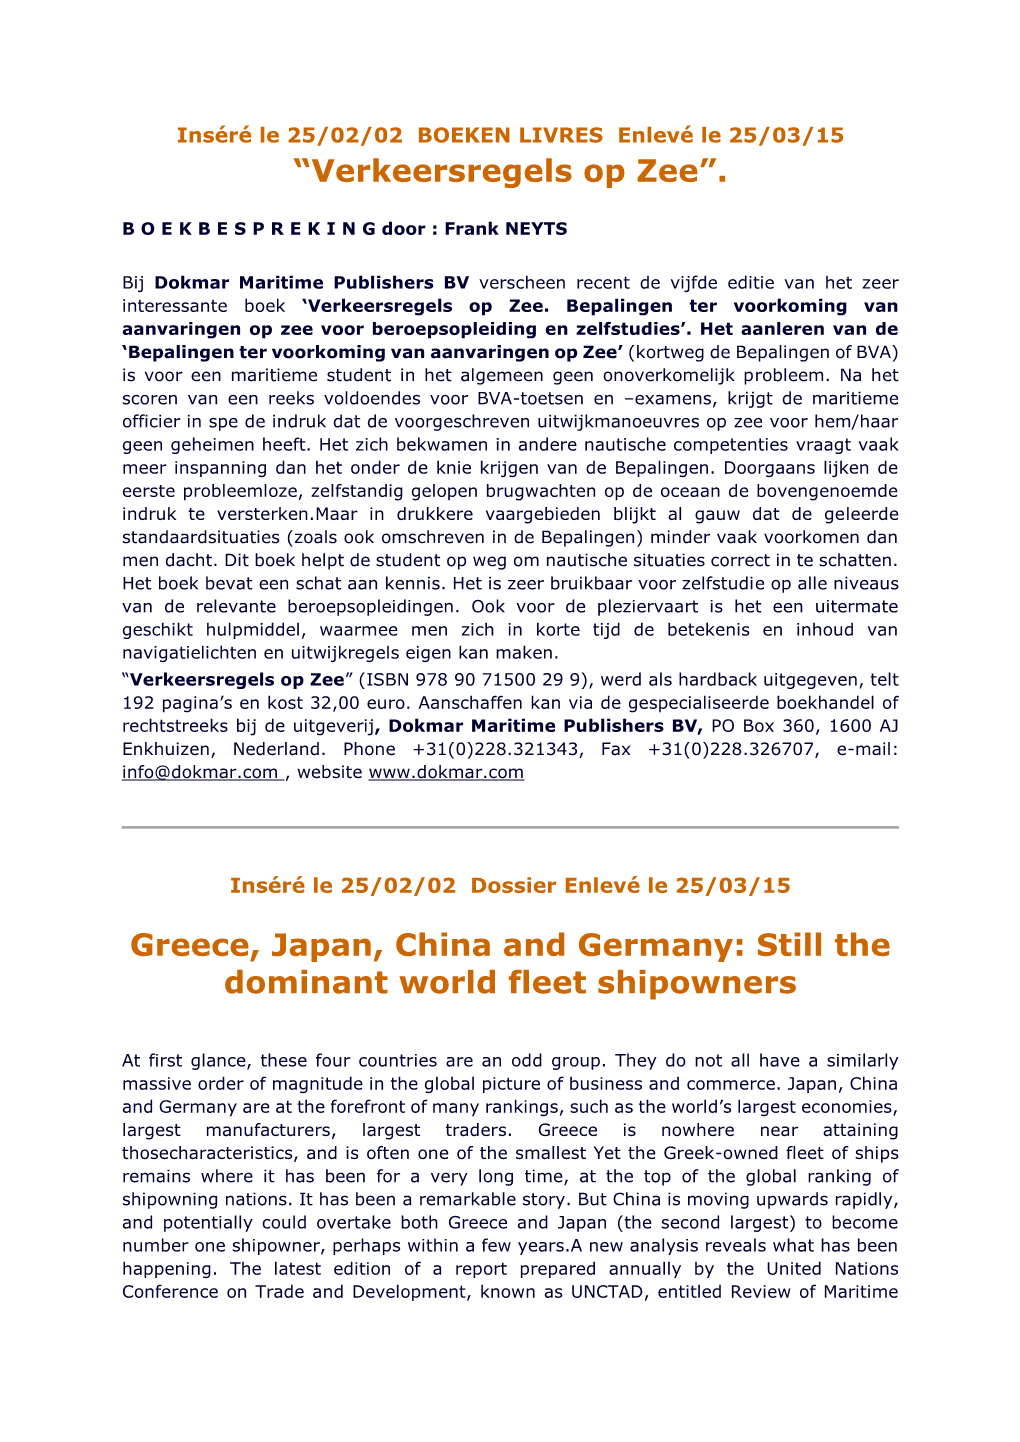 Still the Dominant World Fleet Shipowners